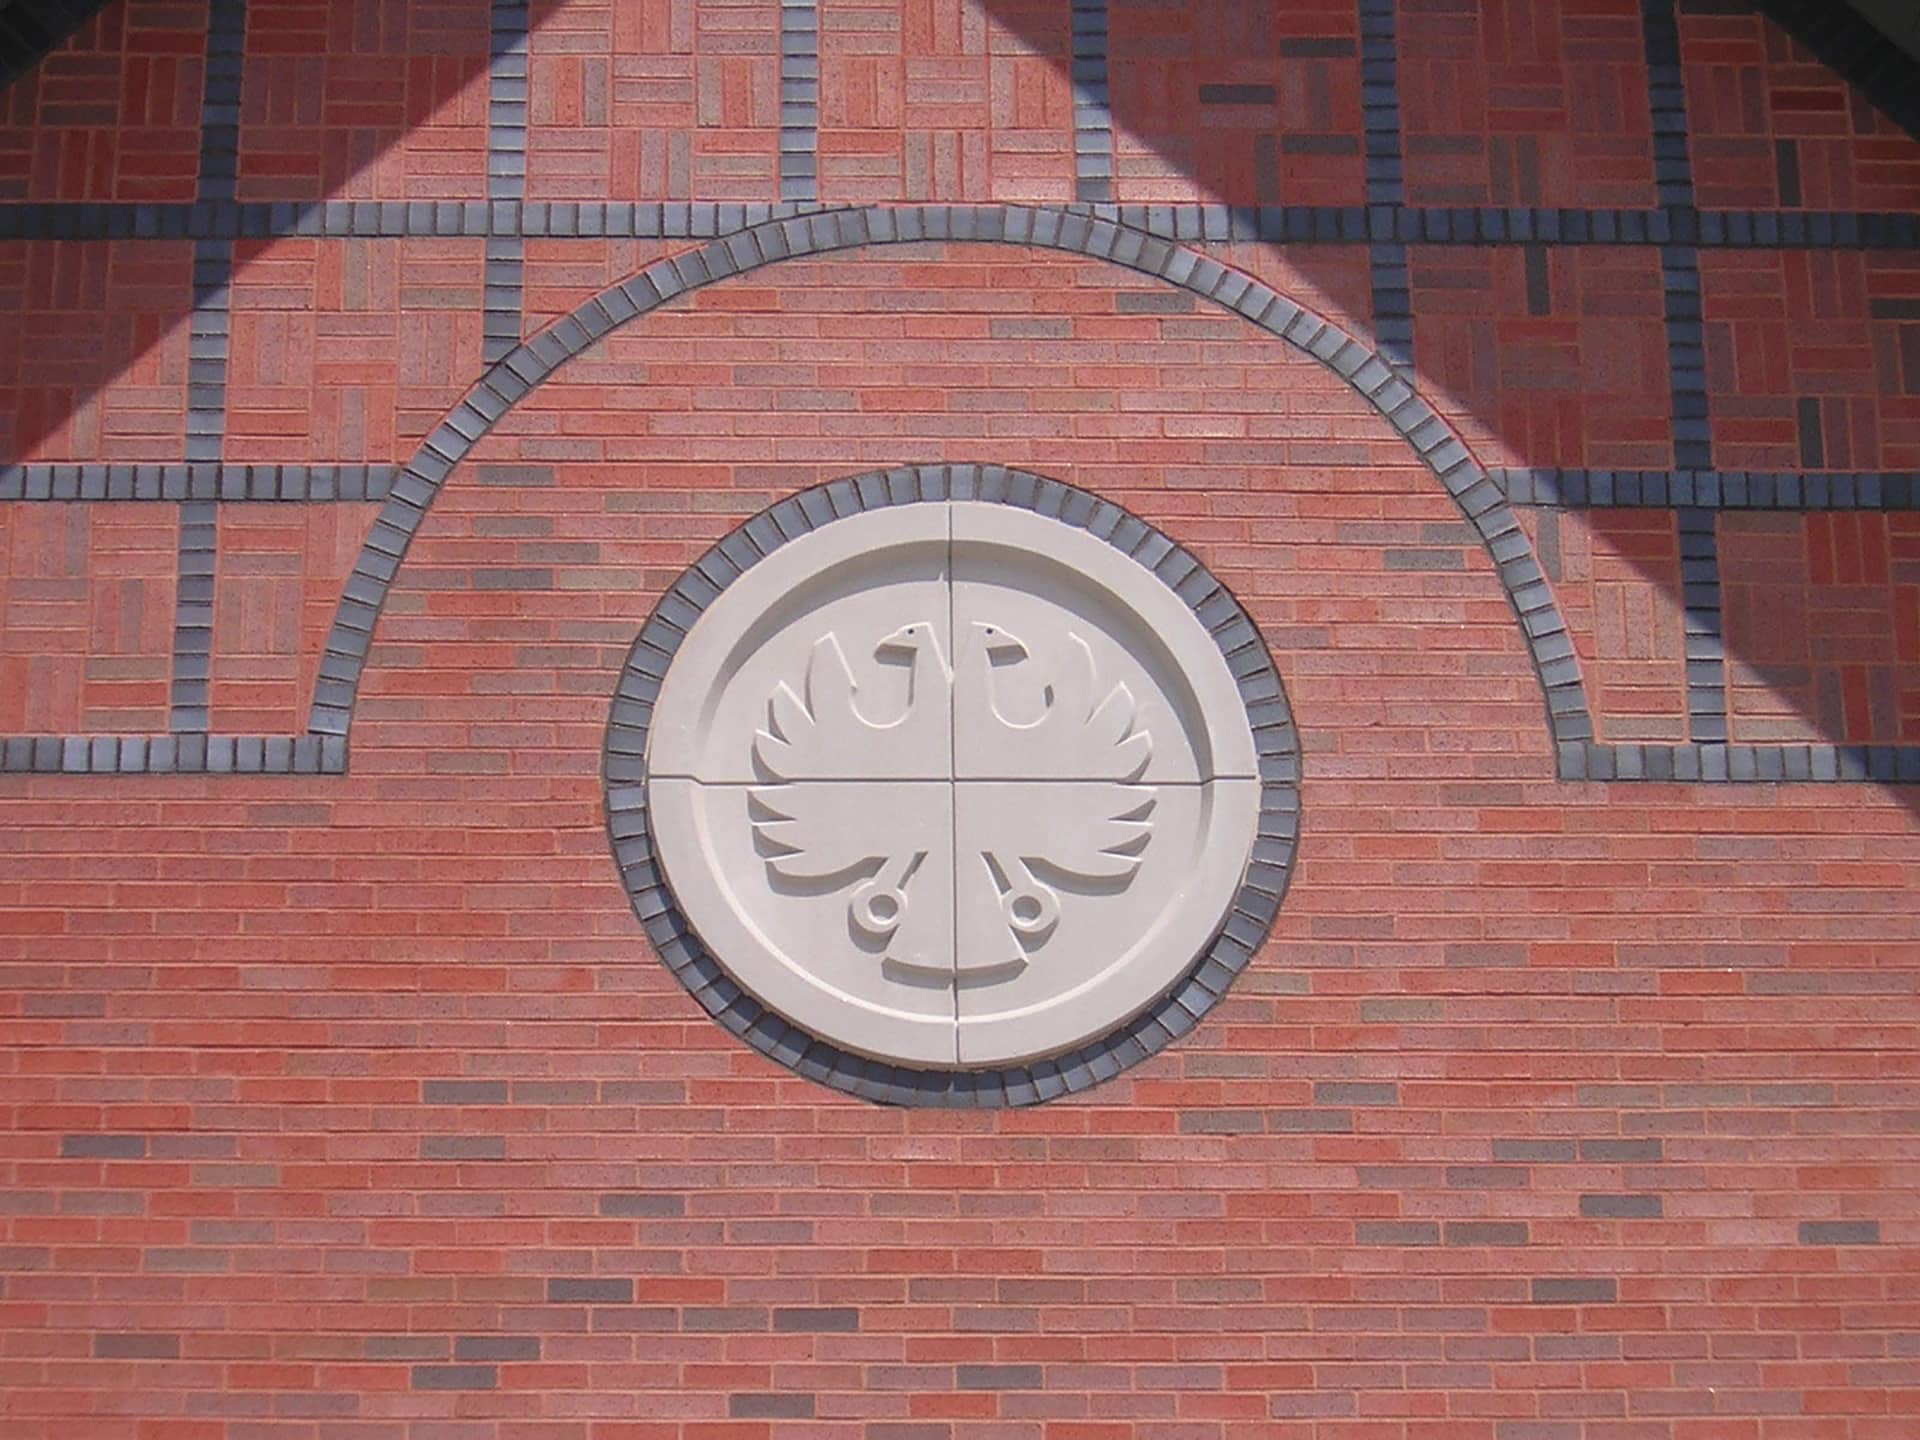 Schneithorst logo on the building